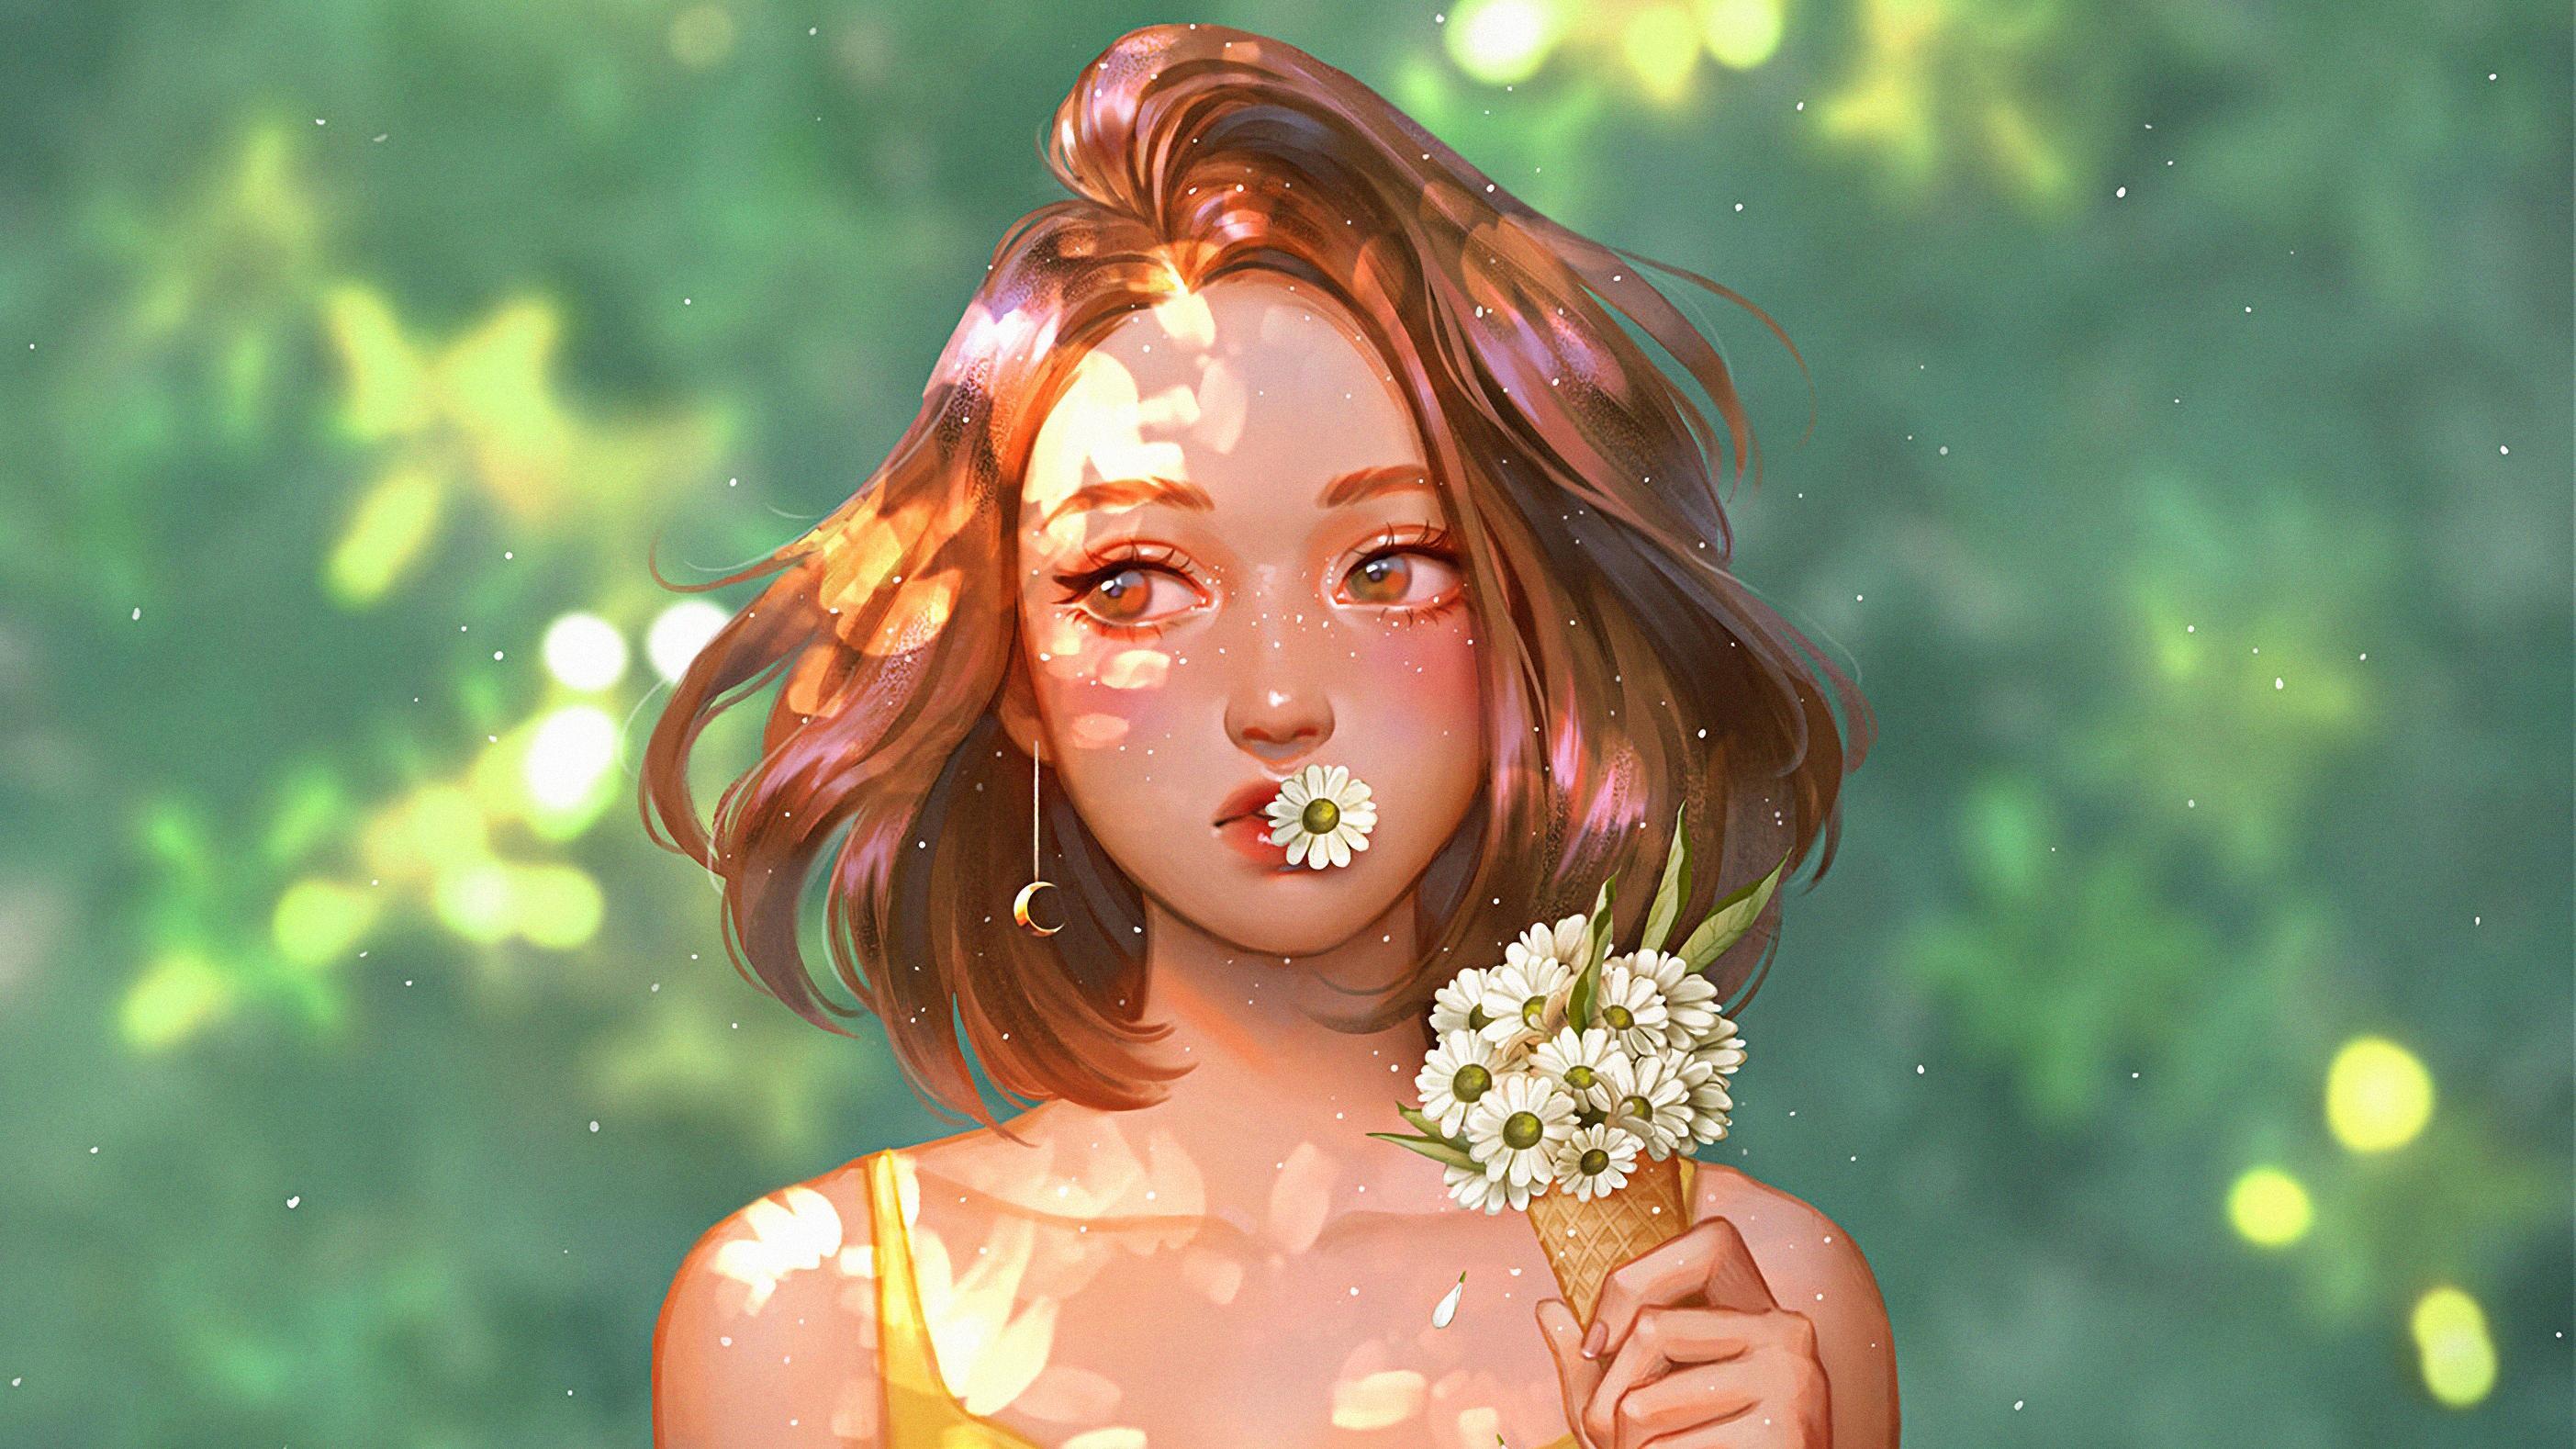 Girl With Daisy Flowers, HD Artist, 4k Wallpaper, Image